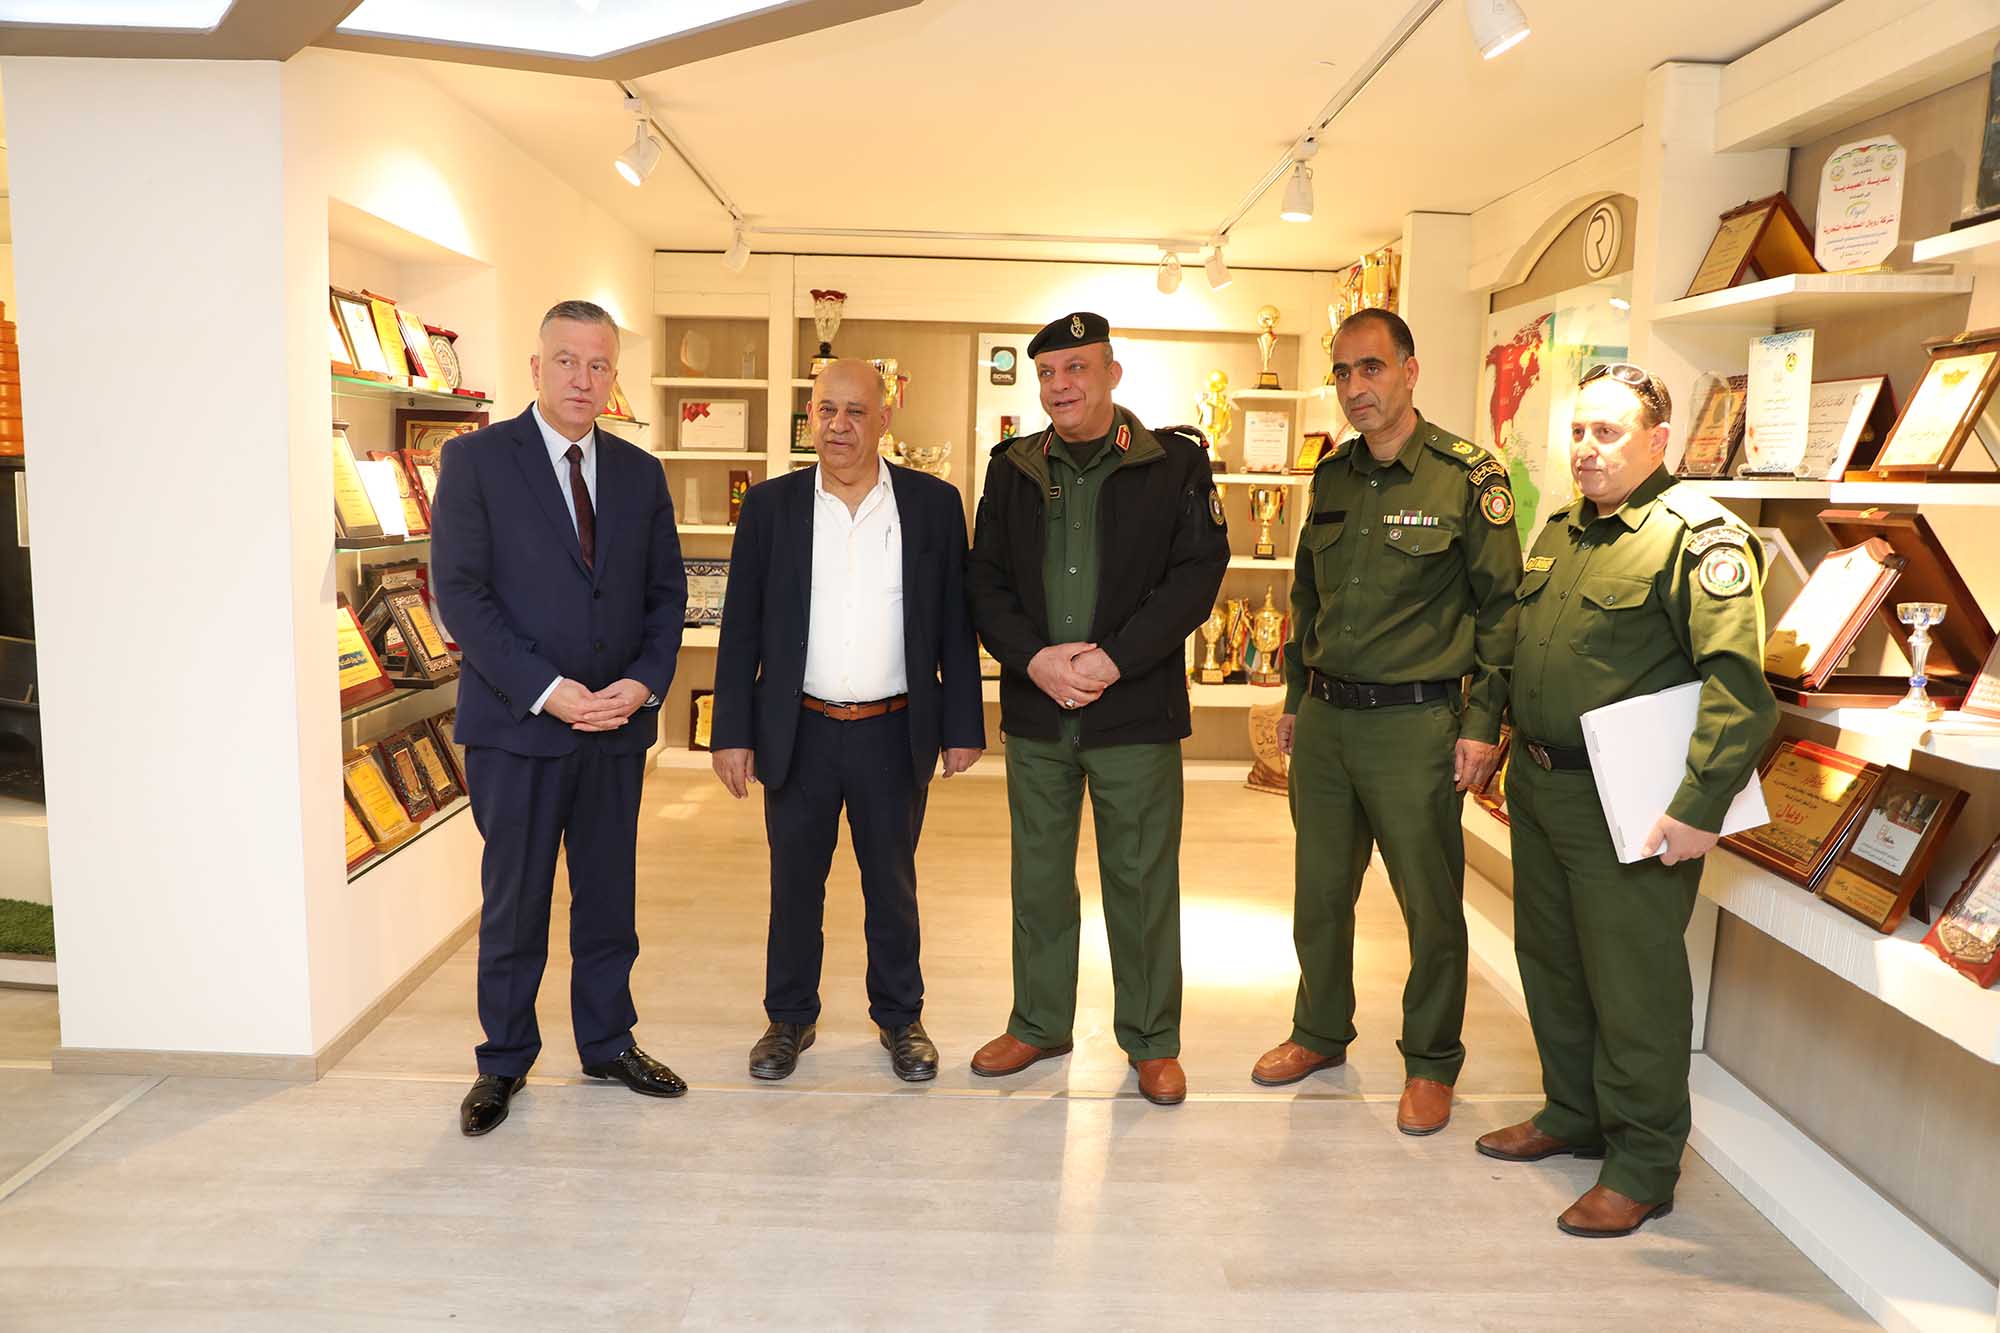 Royal welcomes the commander of the Hebron area Brig. Gen. Said Najjar